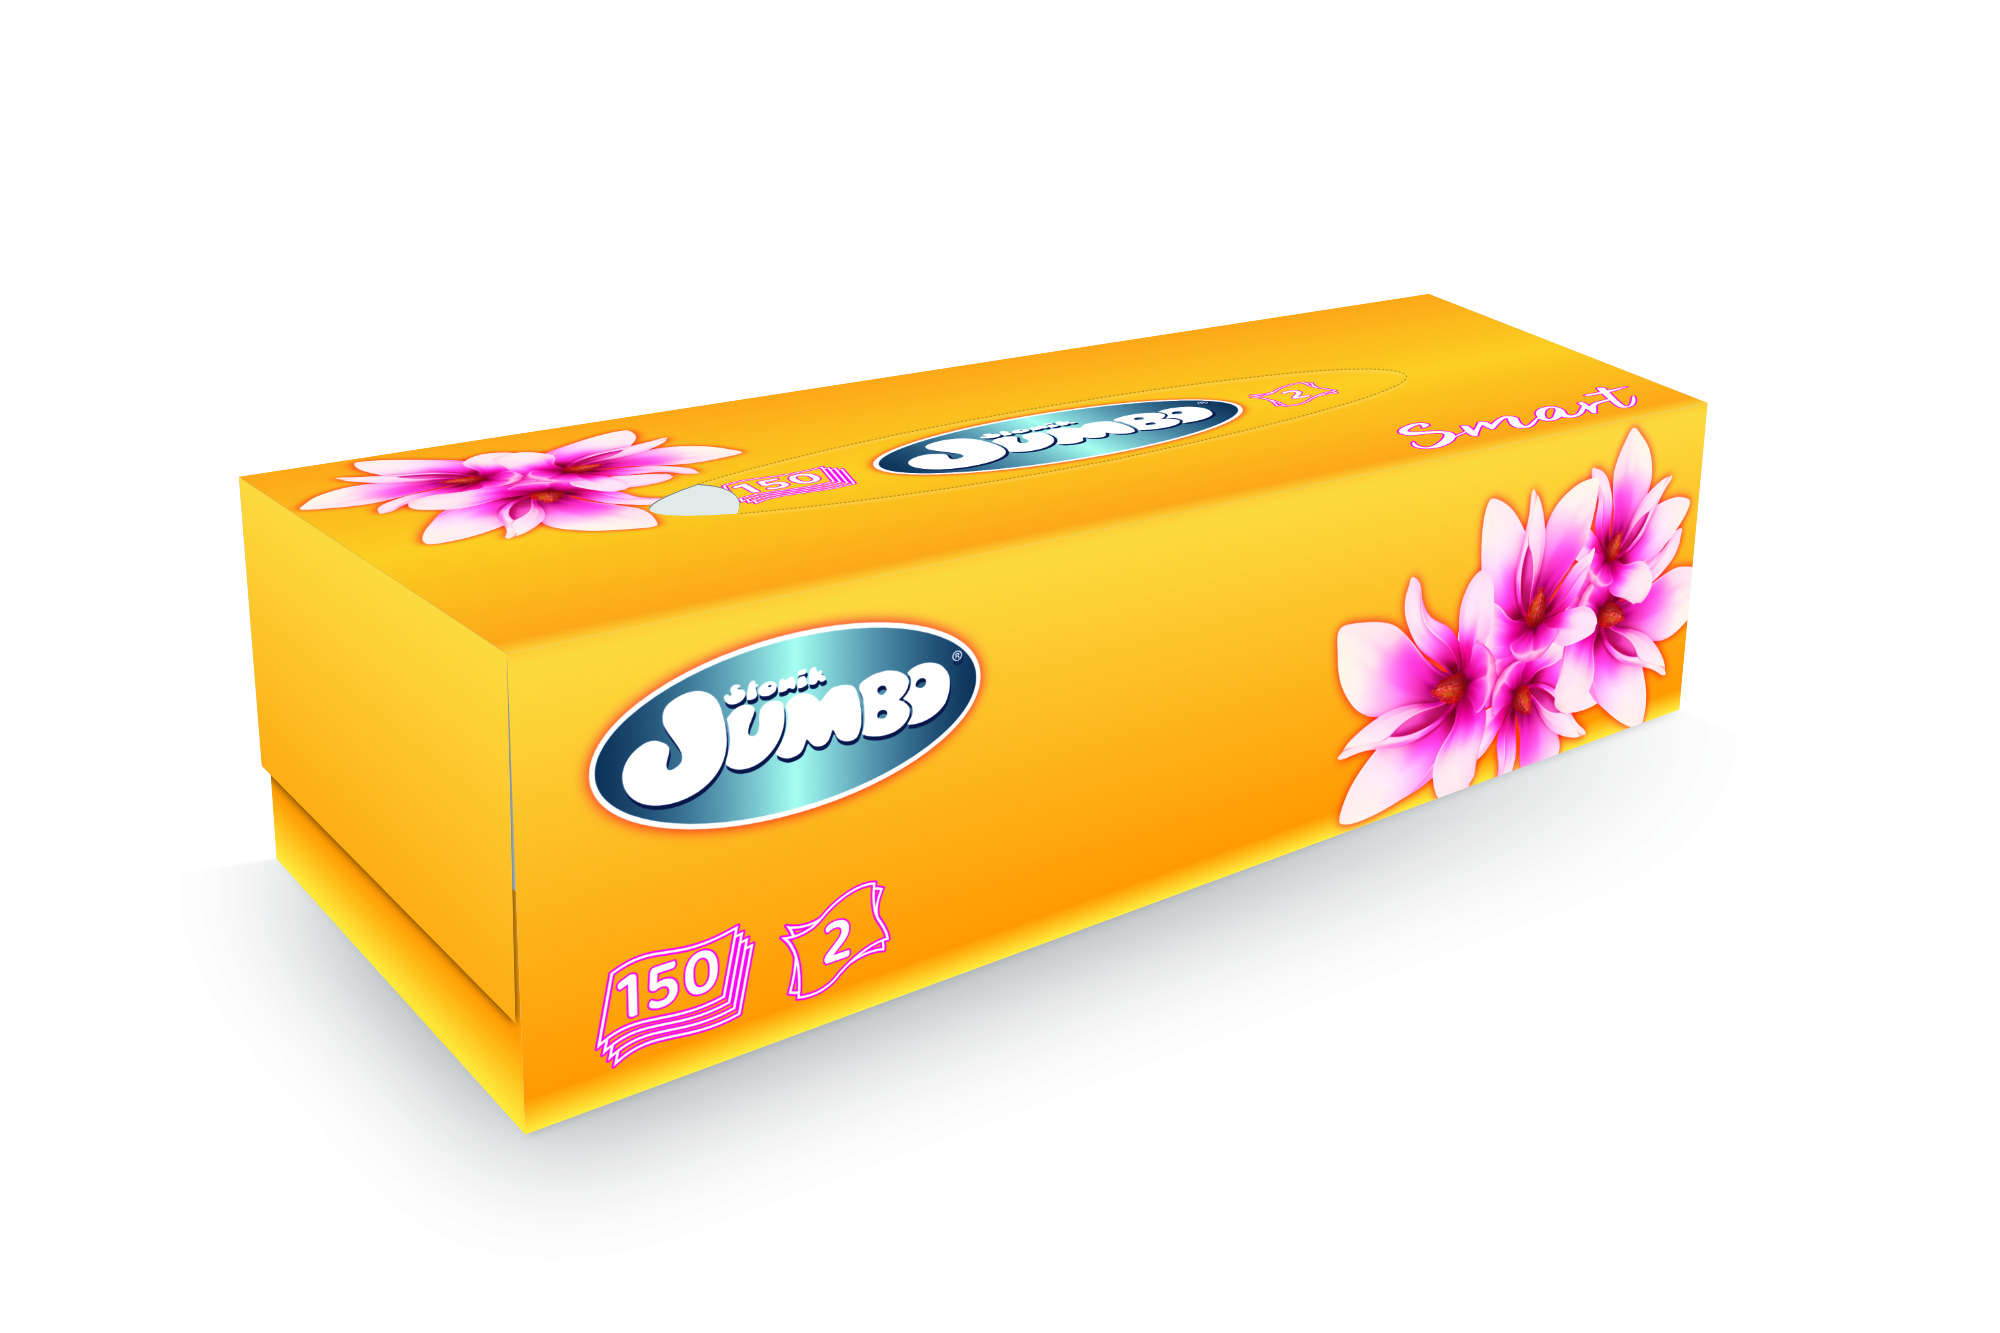 Universal tissues Słonik Jumbo box 150